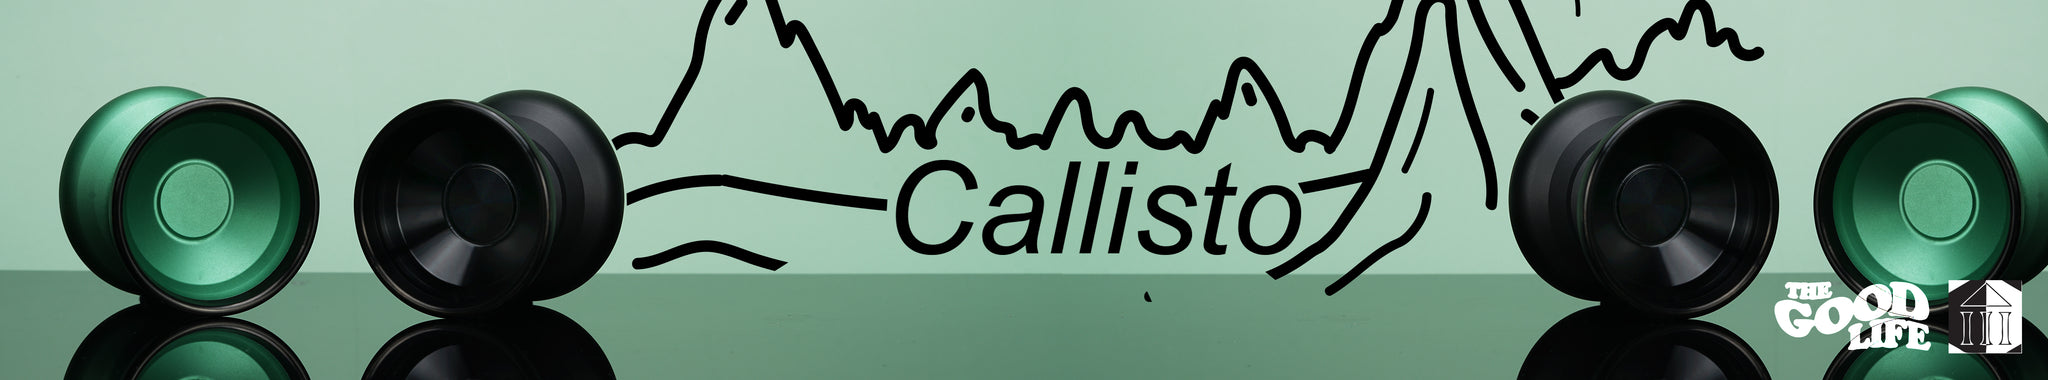 Callisto by Good Life x Dressel Designs